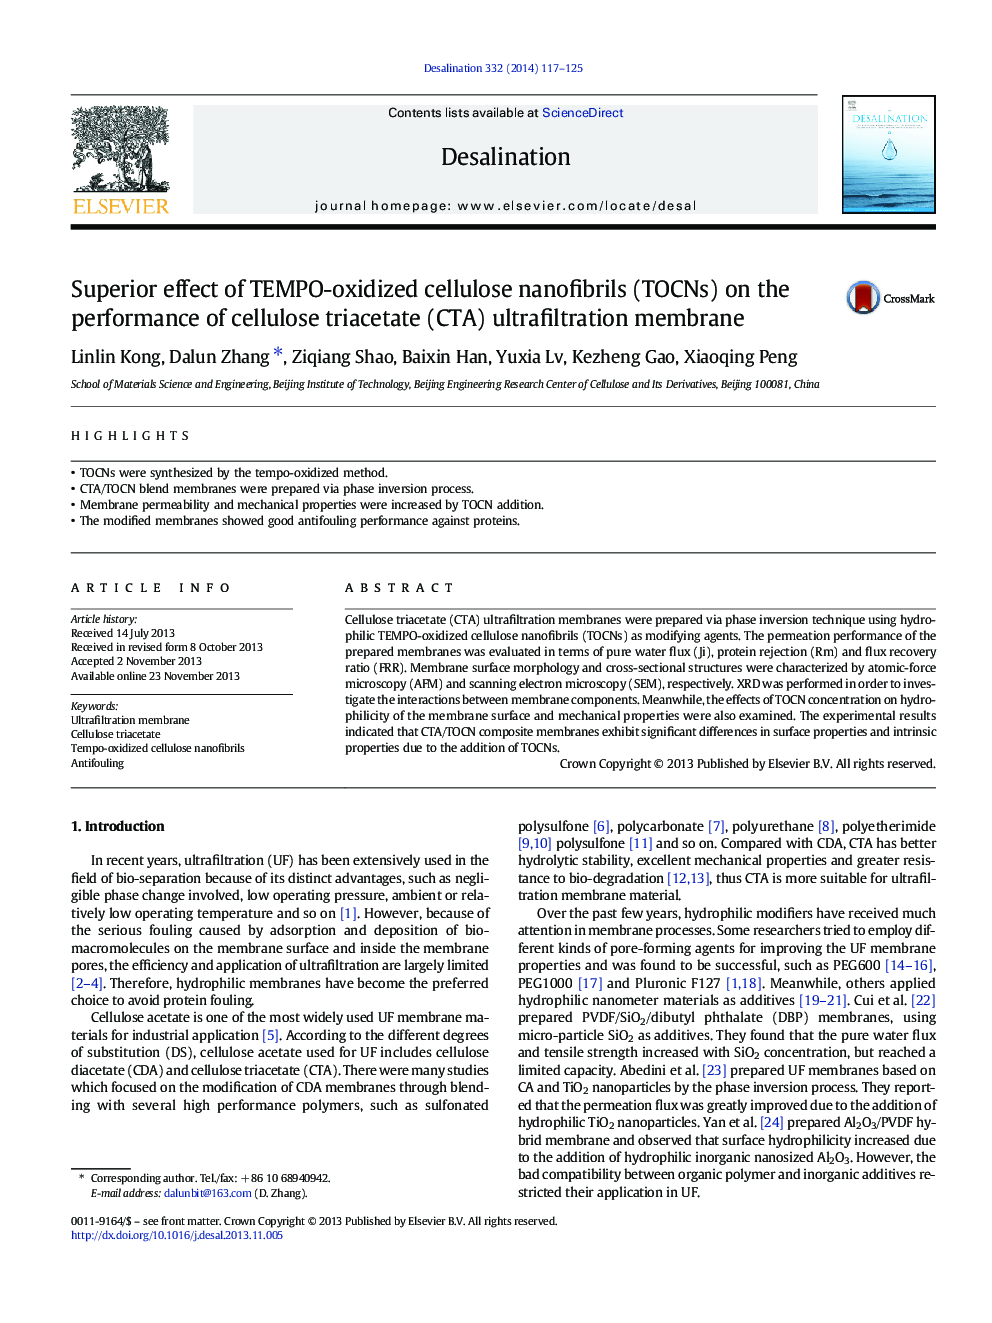 Superior effect of TEMPO-oxidized cellulose nanofibrils (TOCNs) on the performance of cellulose triacetate (CTA) ultrafiltration membrane